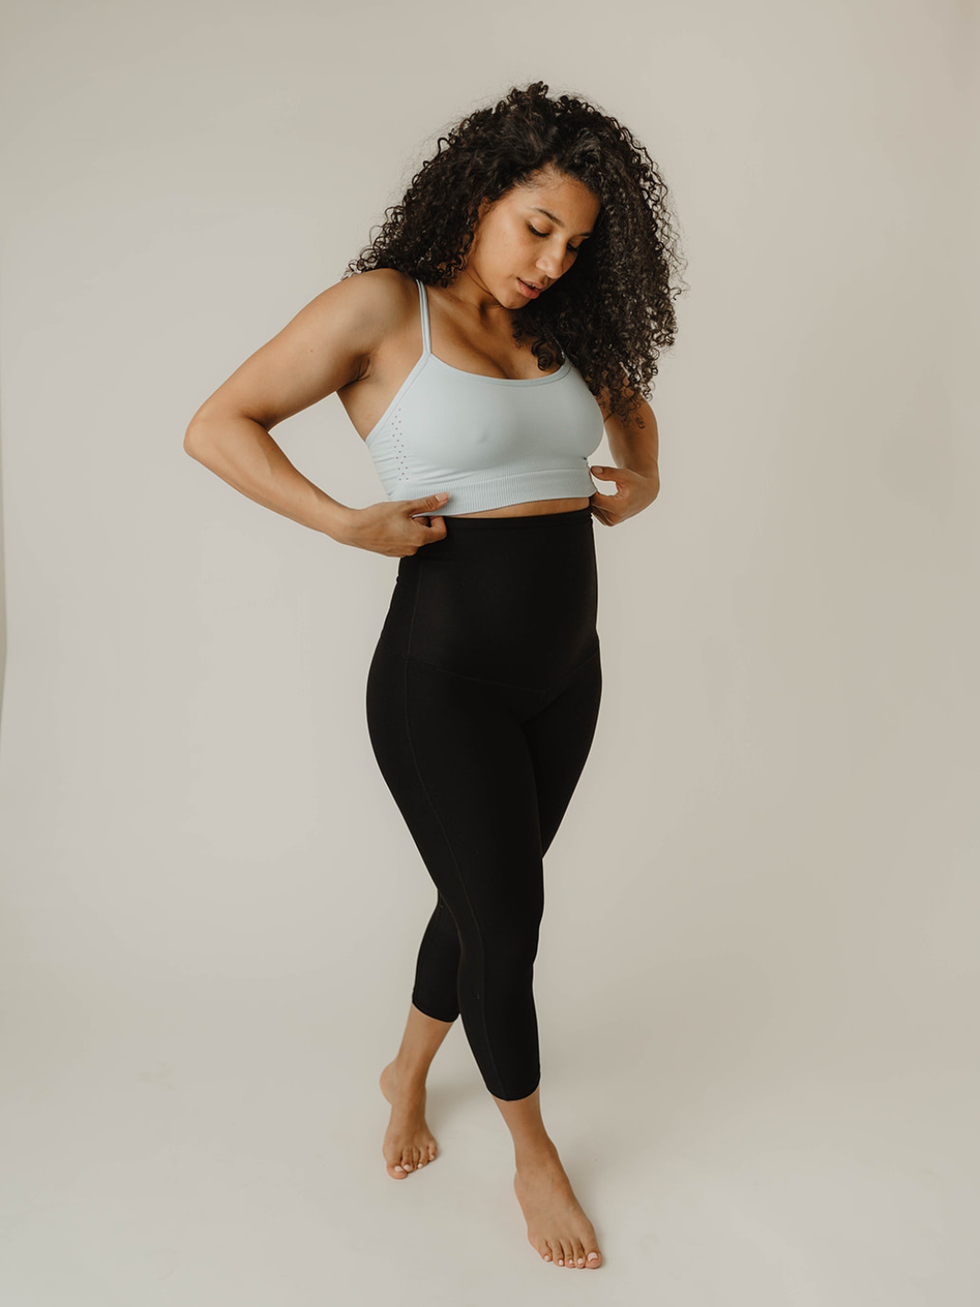 MELDVDIB High Waist Yoga Pants, Tummy Control Workout Running Yoga Leggings  for Women 